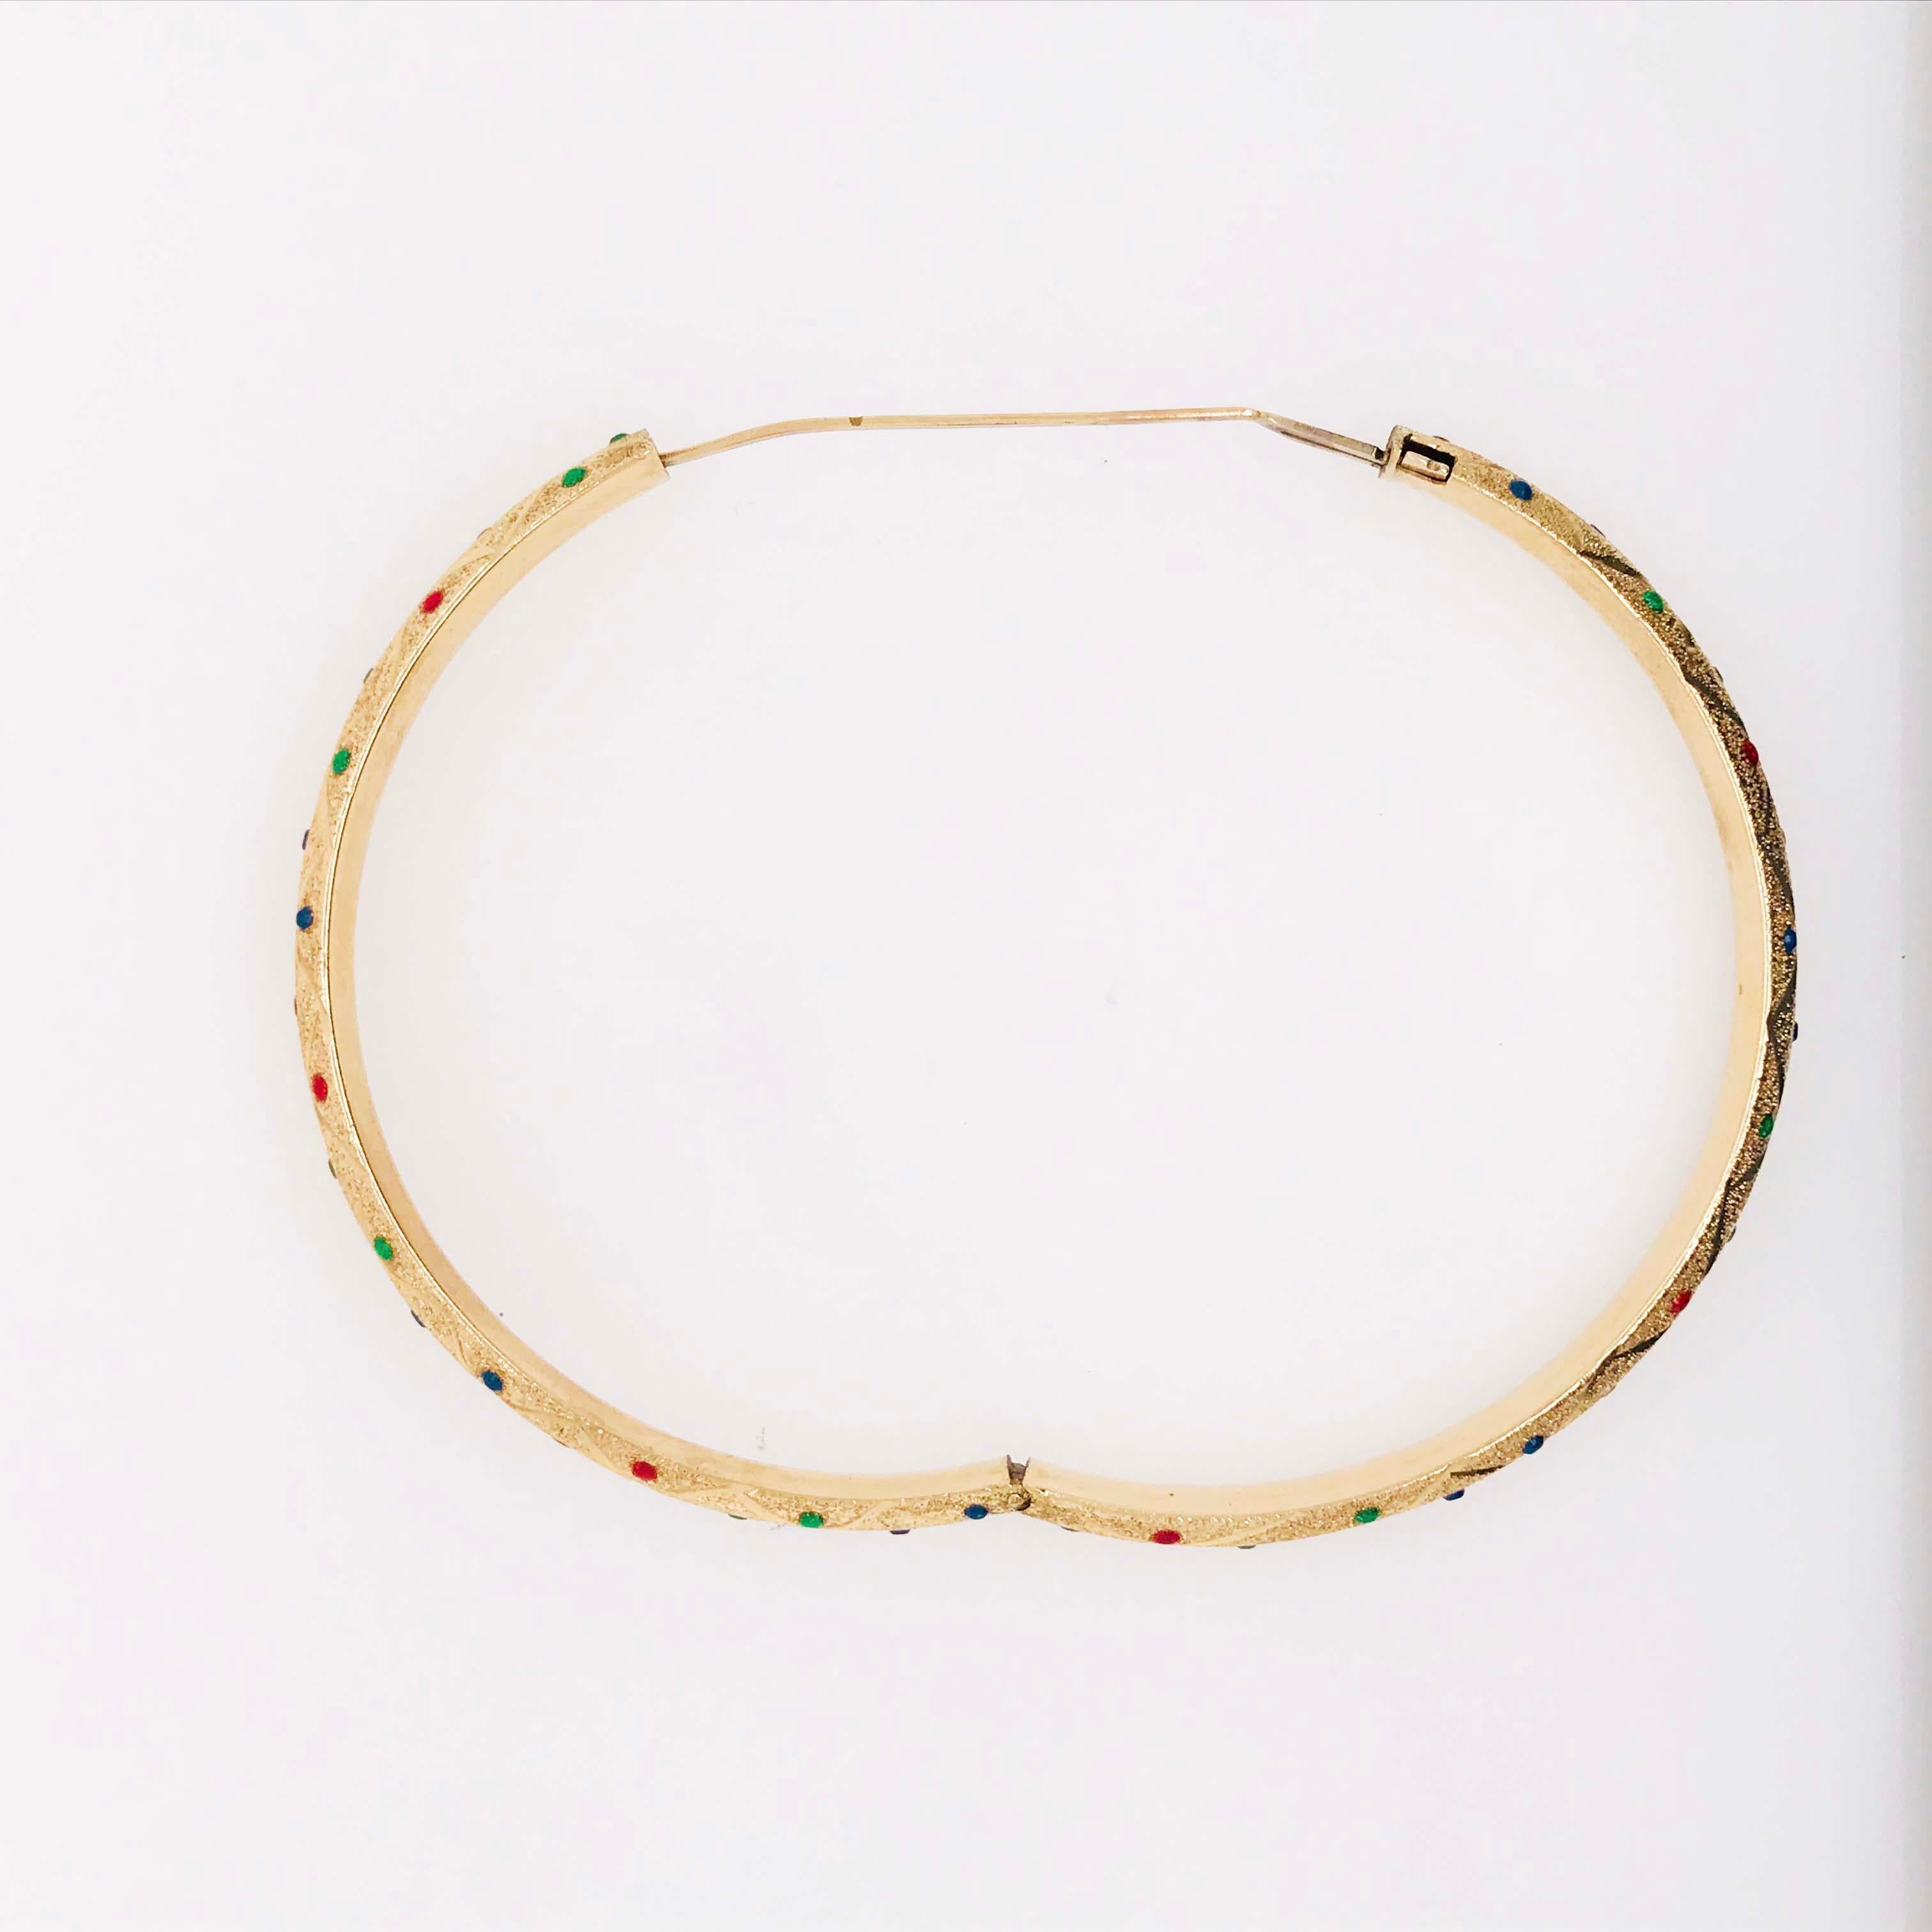 Artisan Red, Blue & Green Enamel Gold Bangle Bracelet in 14K Yellow Gold Texture Finish